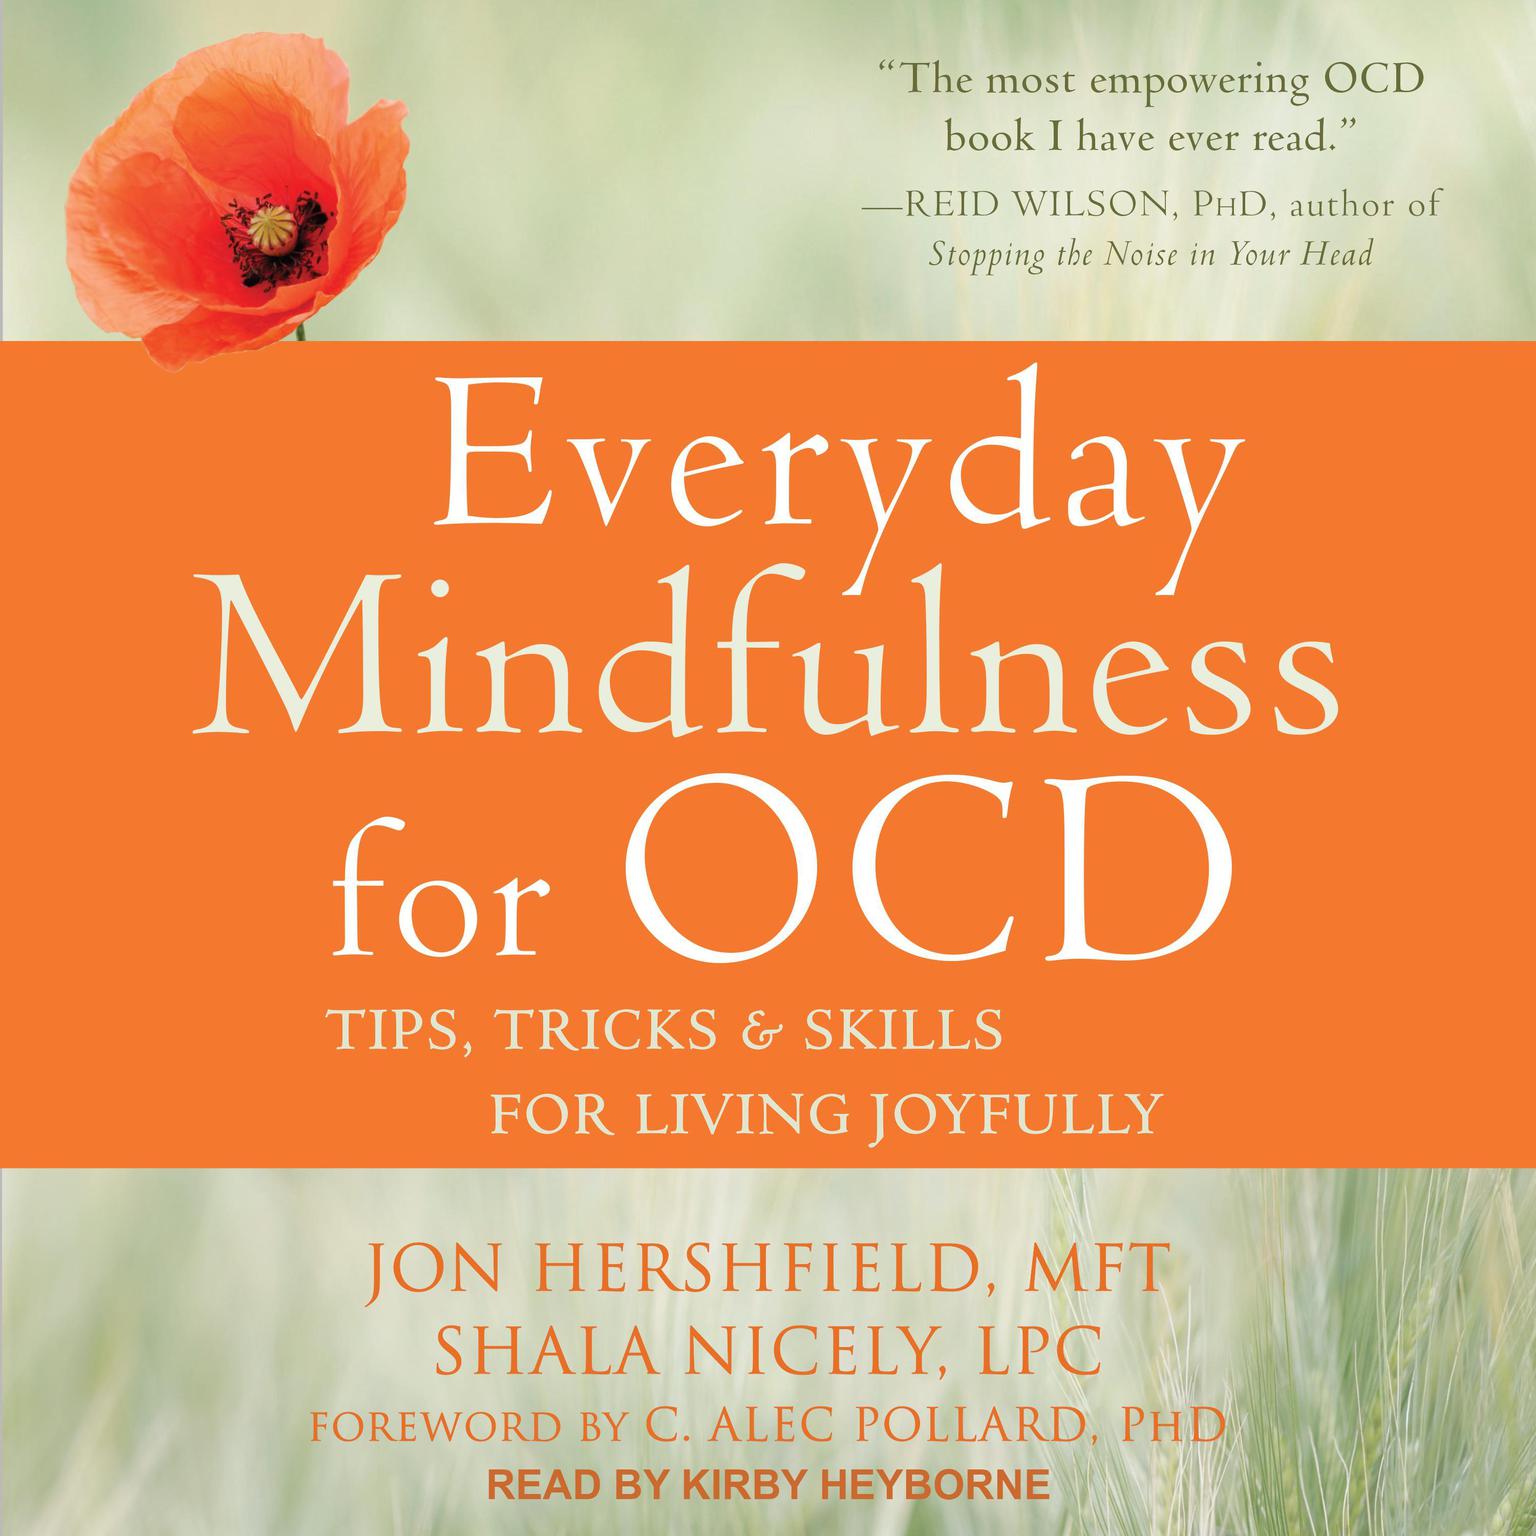 Everyday Mindfulness for OCD: Tips, Tricks & Skills for Living Joyfully Audiobook, by Jon Hershfield